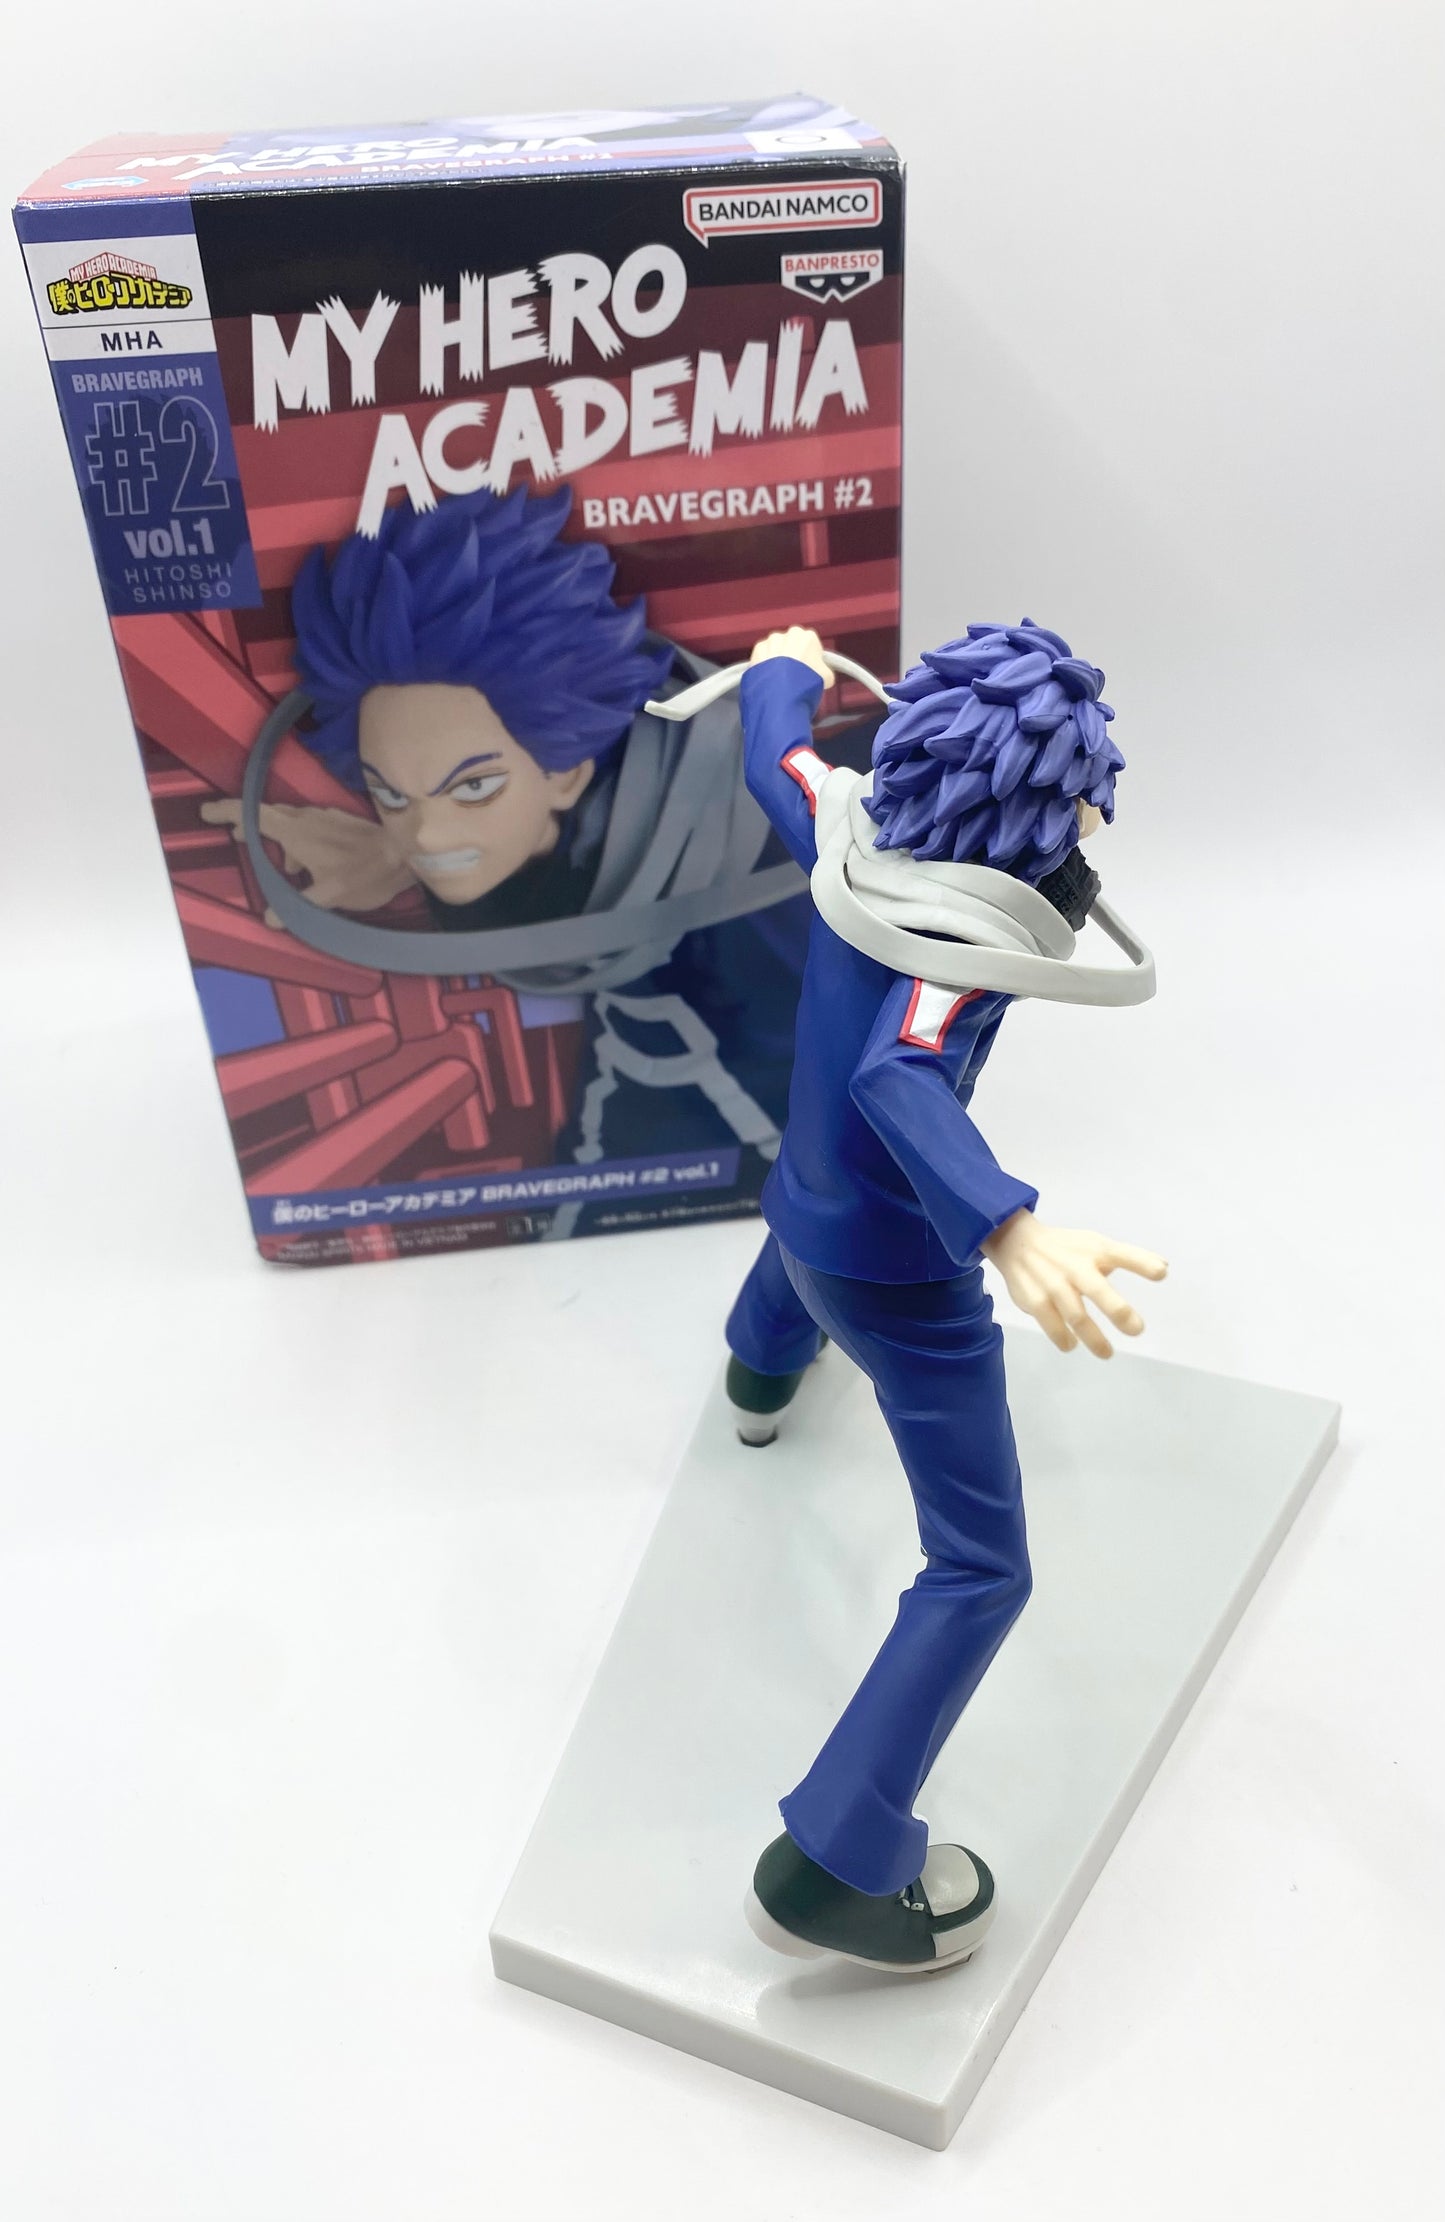 My Hero Academia Bravegraph #2 Vol.1 Bandai Banpresto Figurine